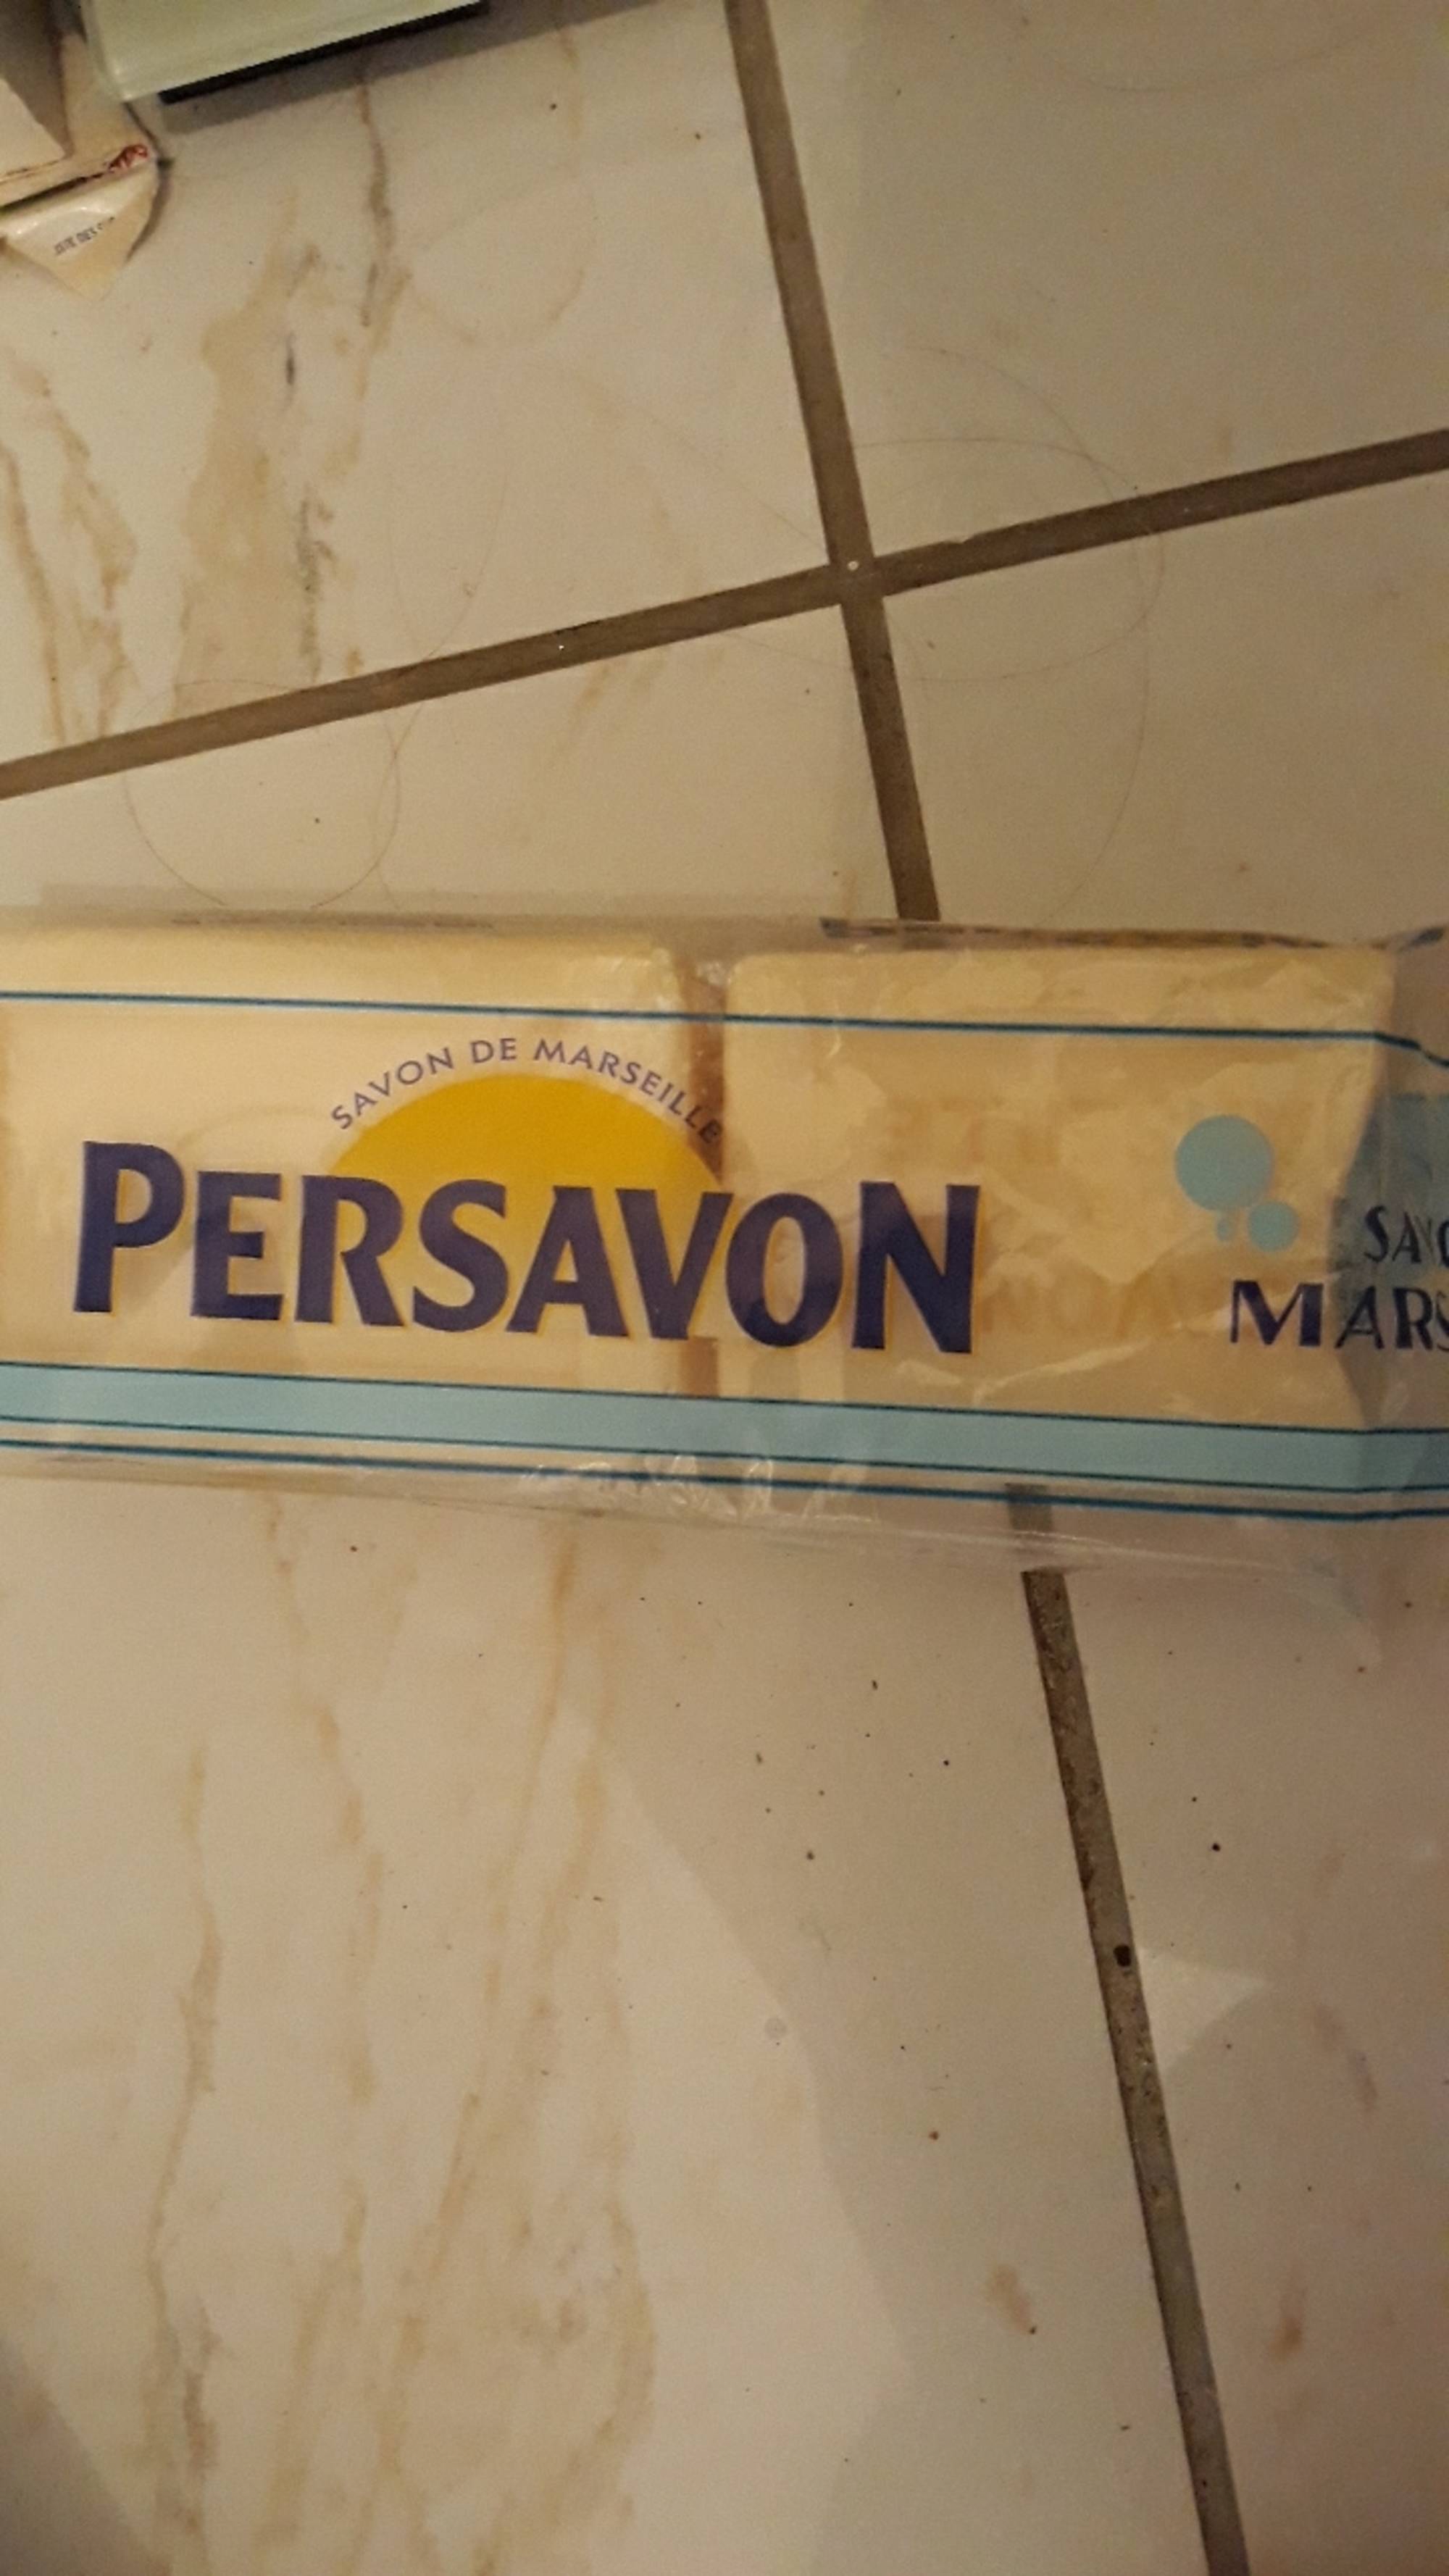 PERSAVON - Le pur - Savon de marseille